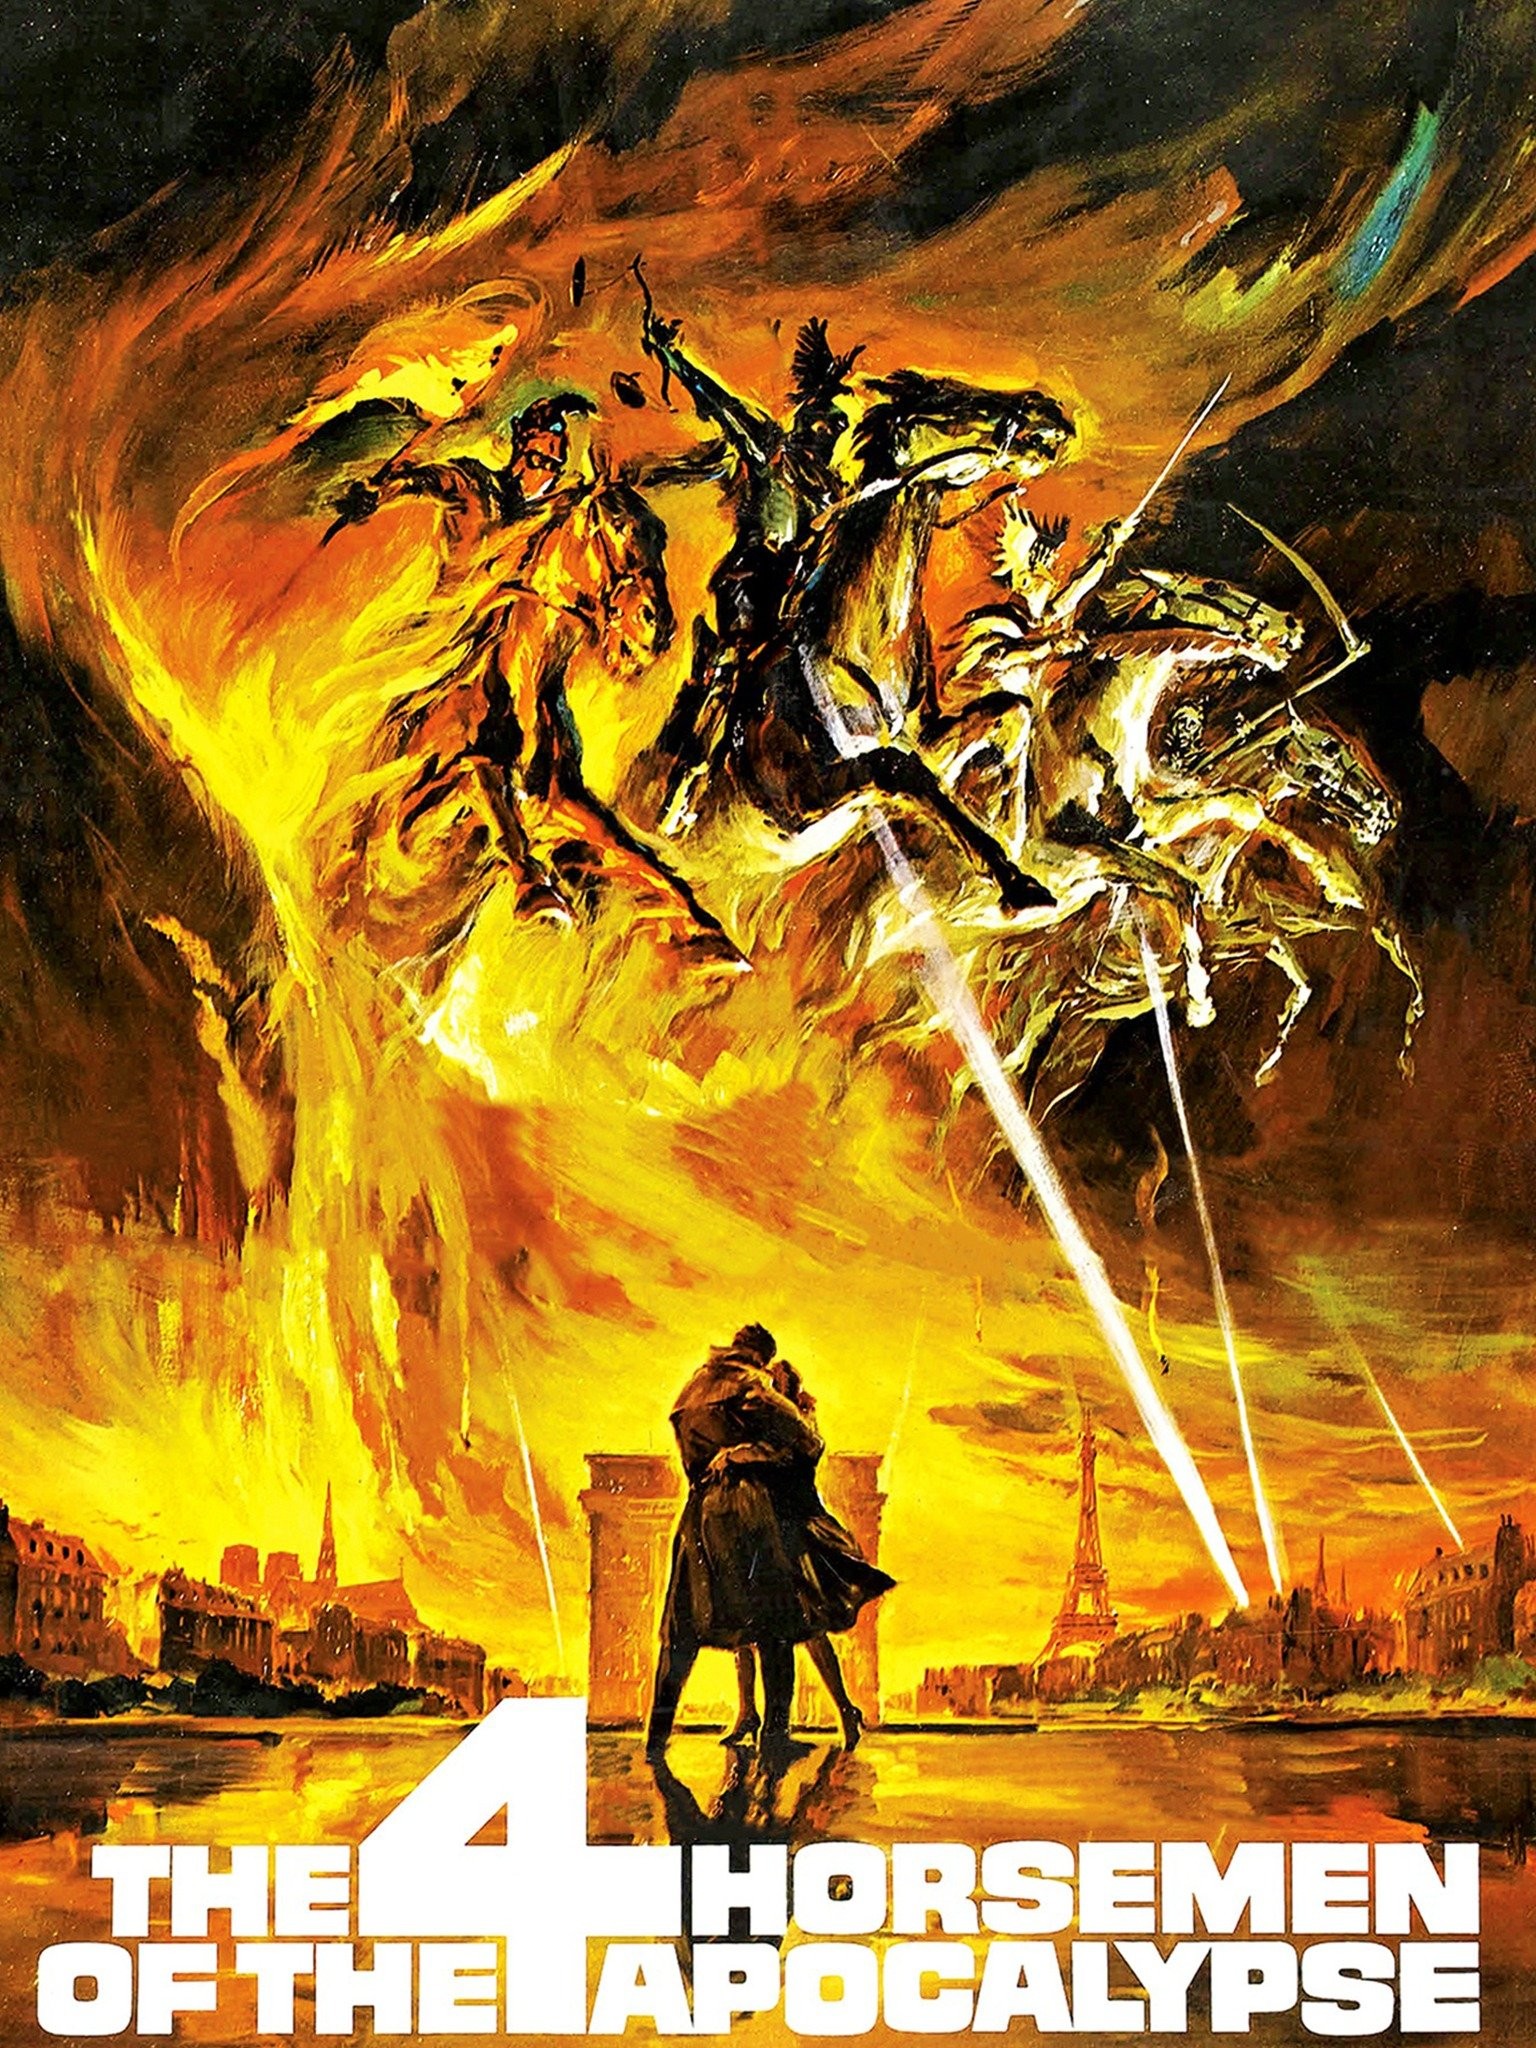 Who are the best Horsemen of Apocalypse? : r/Marvel